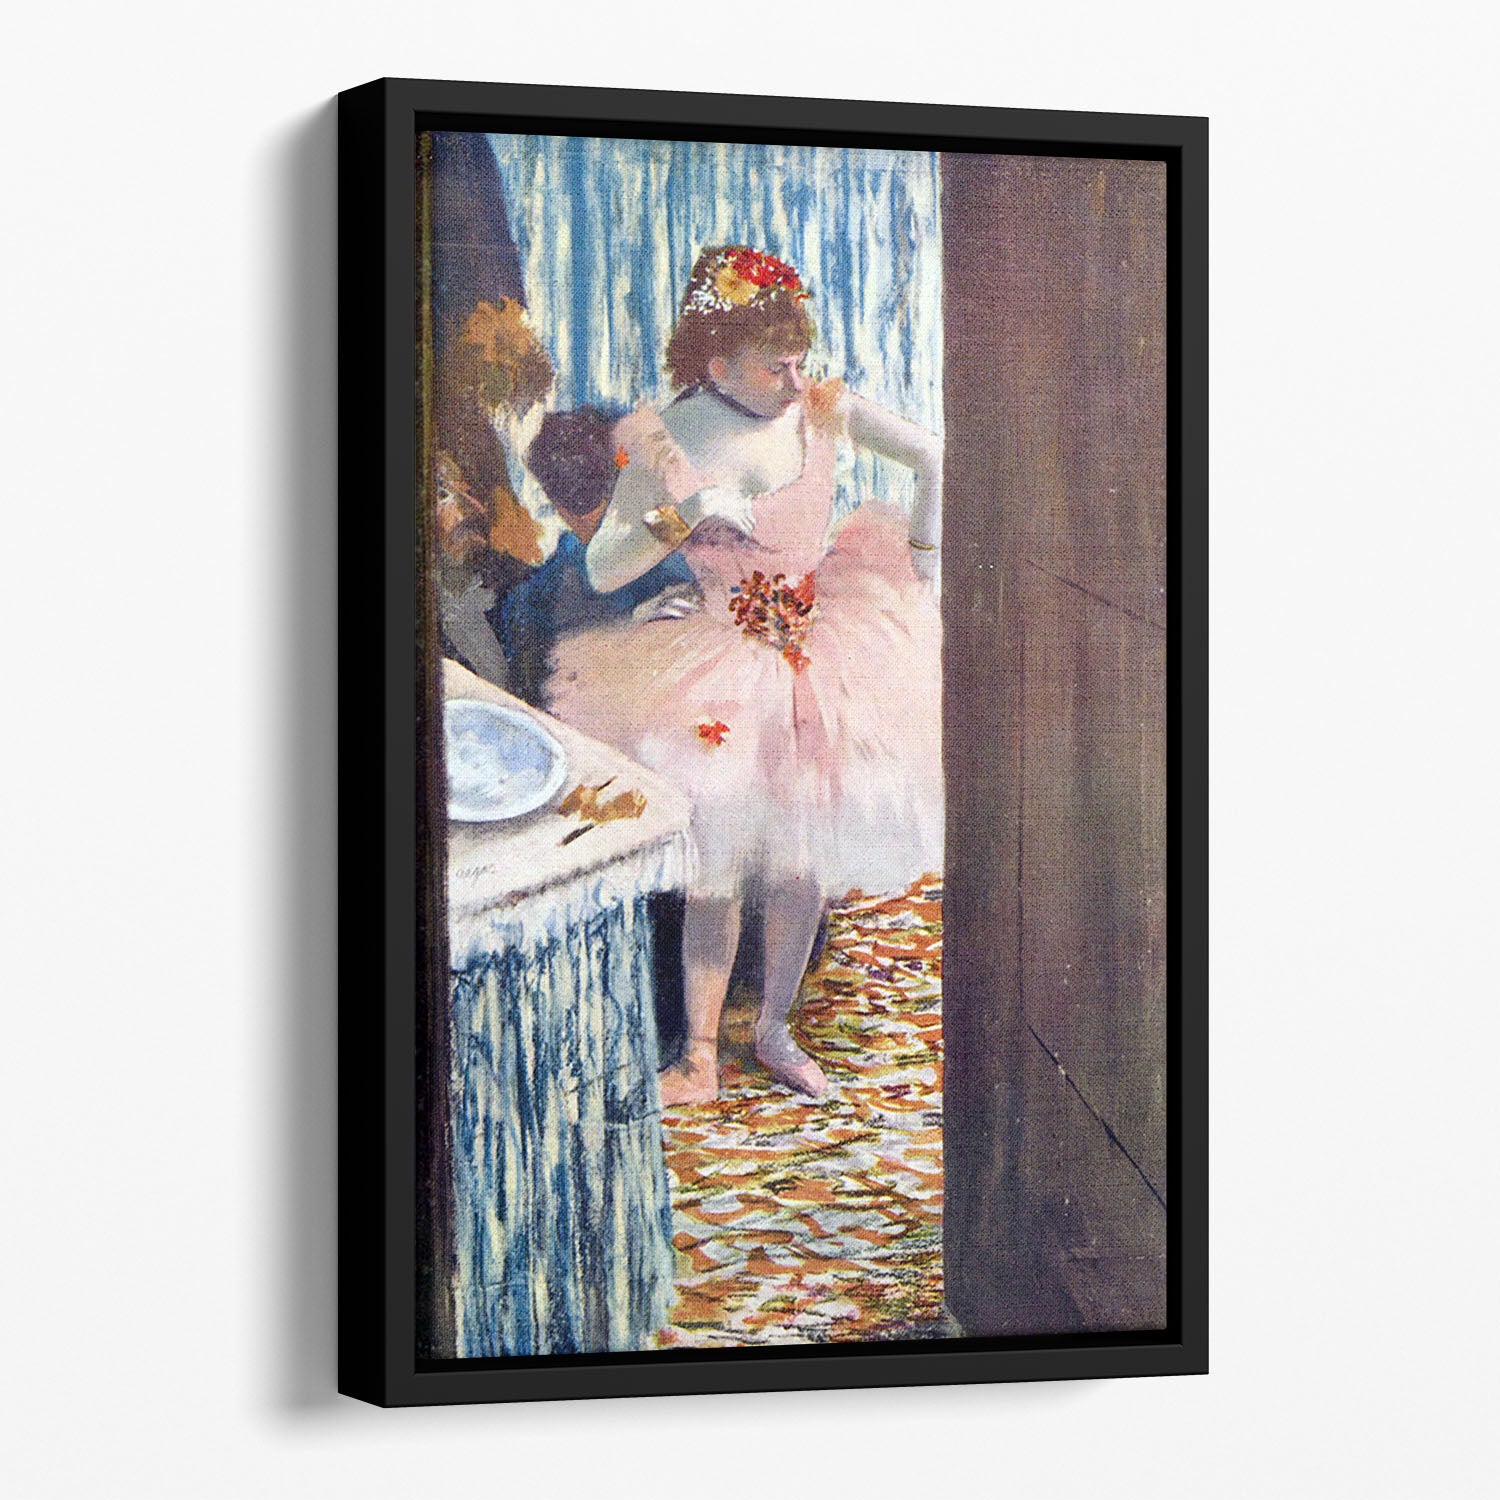 Dancer in the Loge by Degas Floating Framed Canvas